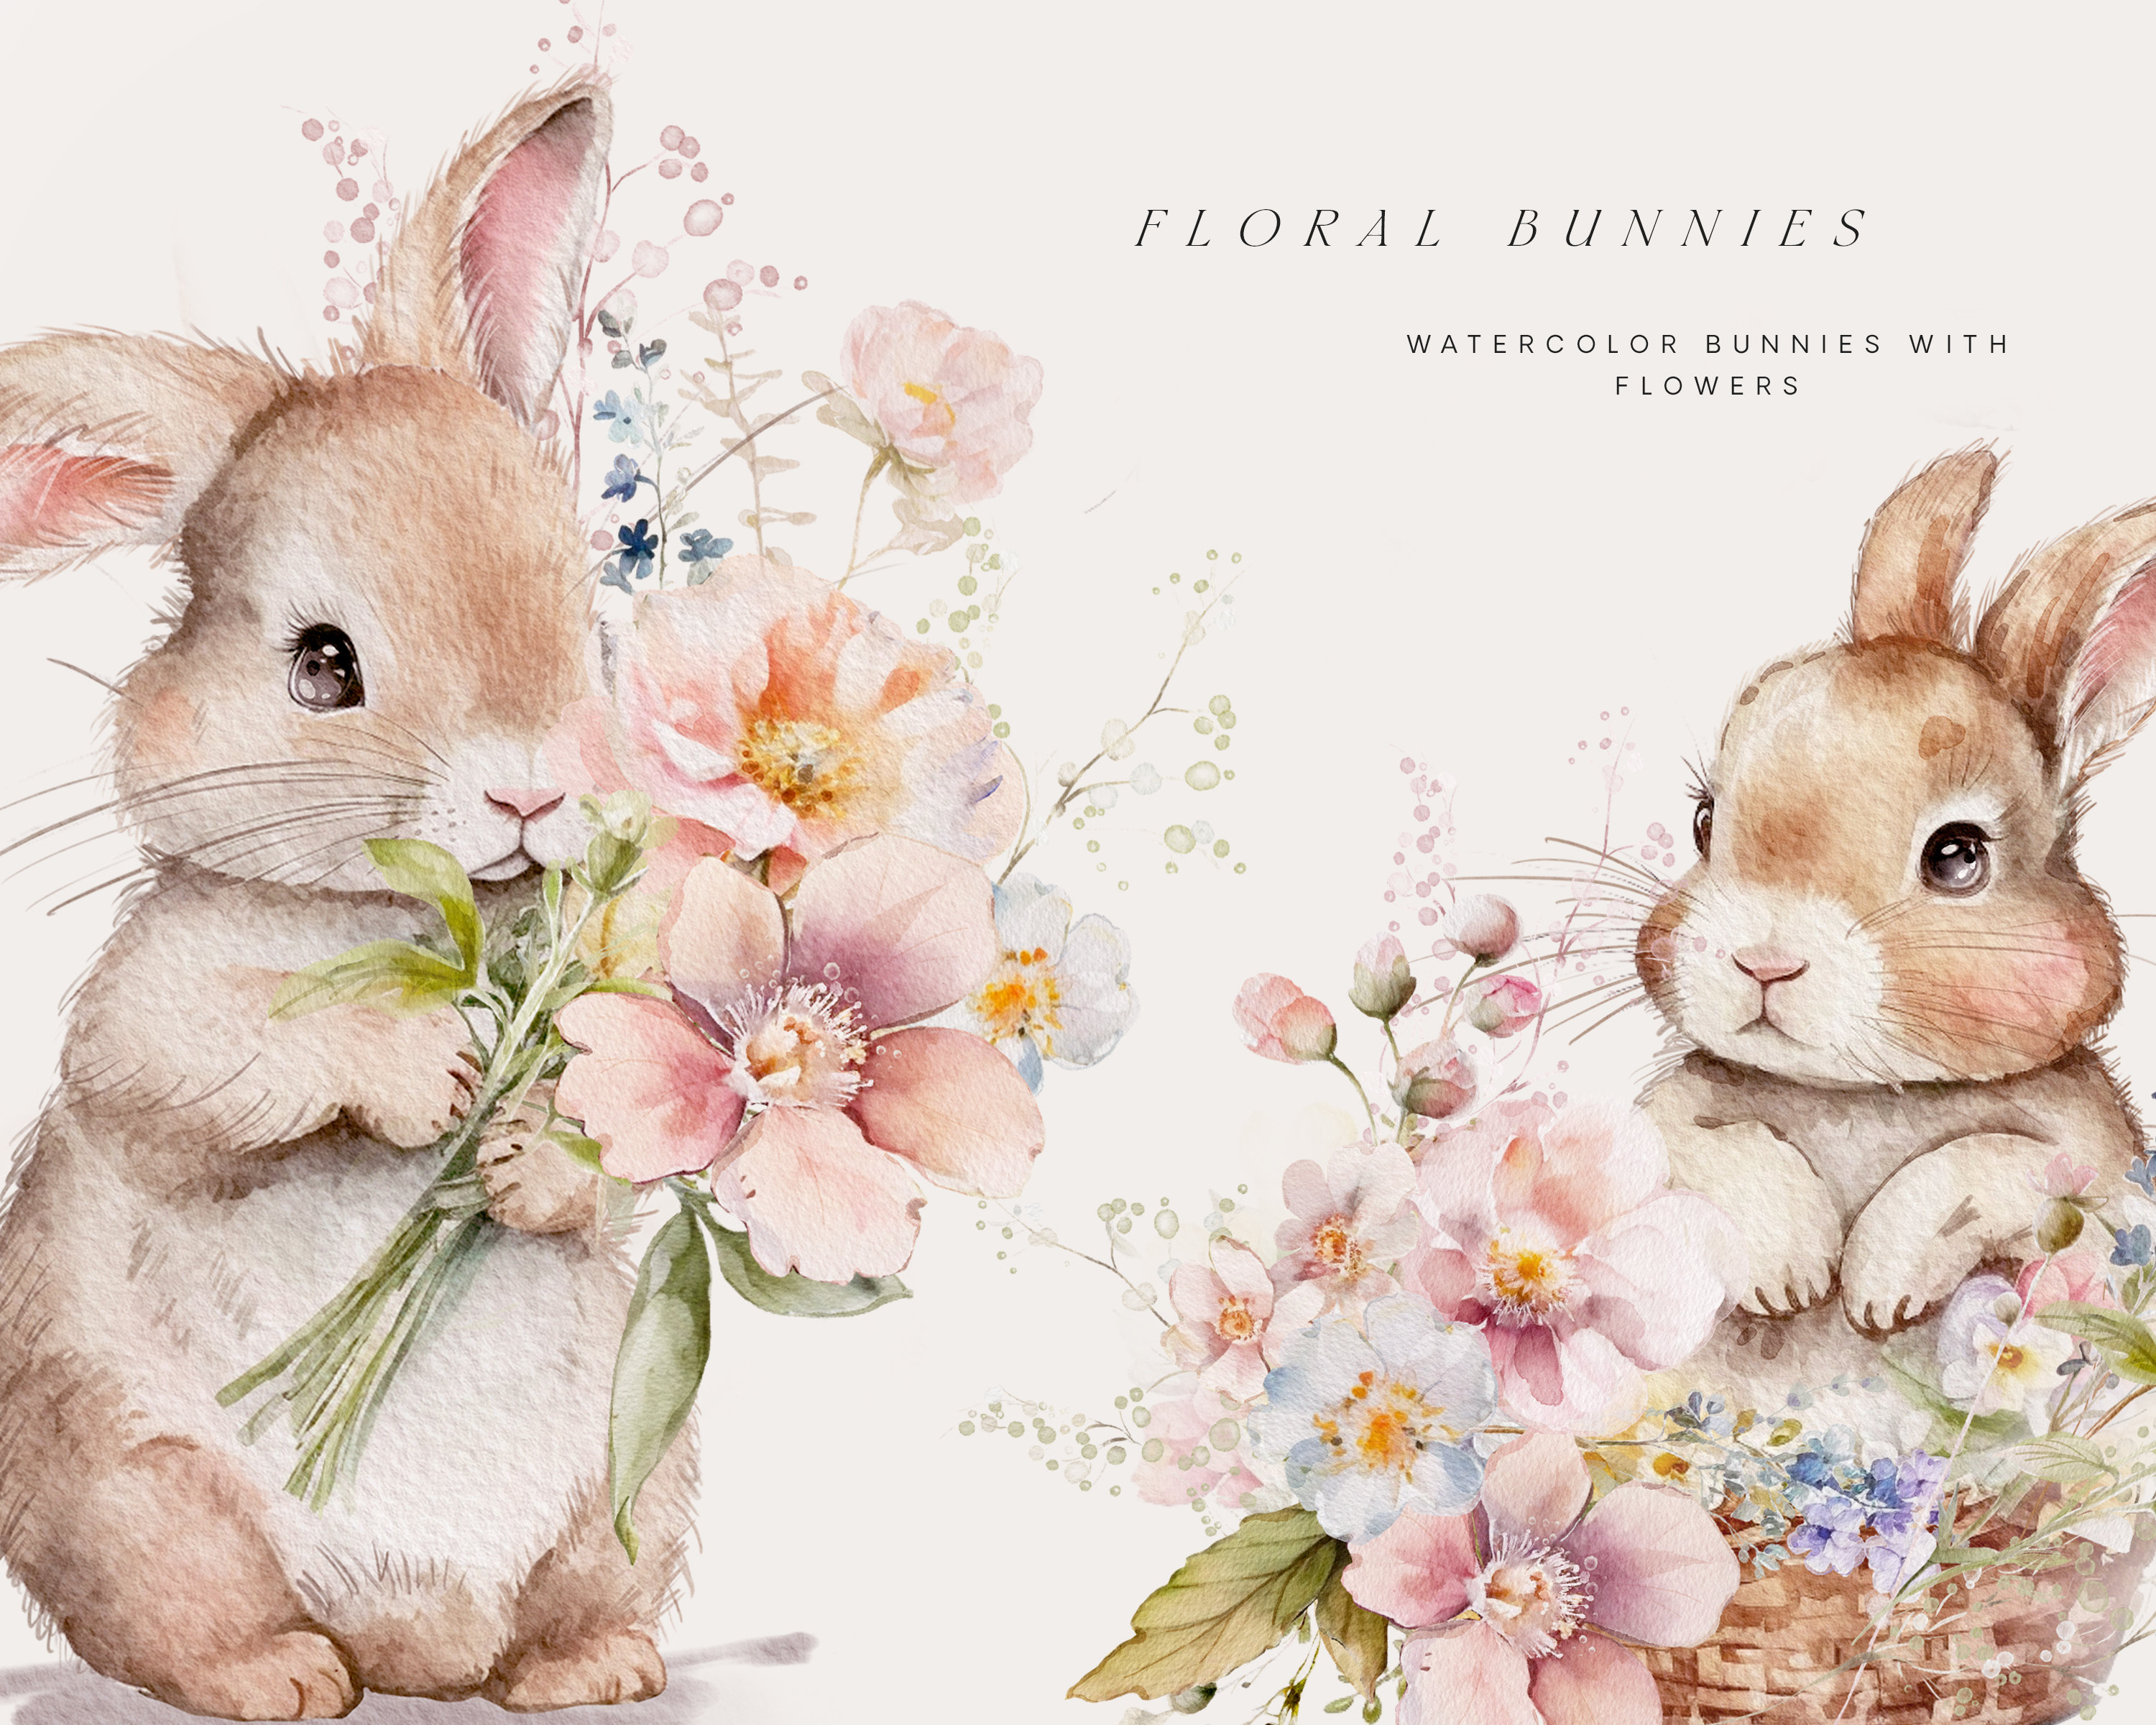 Bunny Flower Picks Holder - Southern Avenue Company